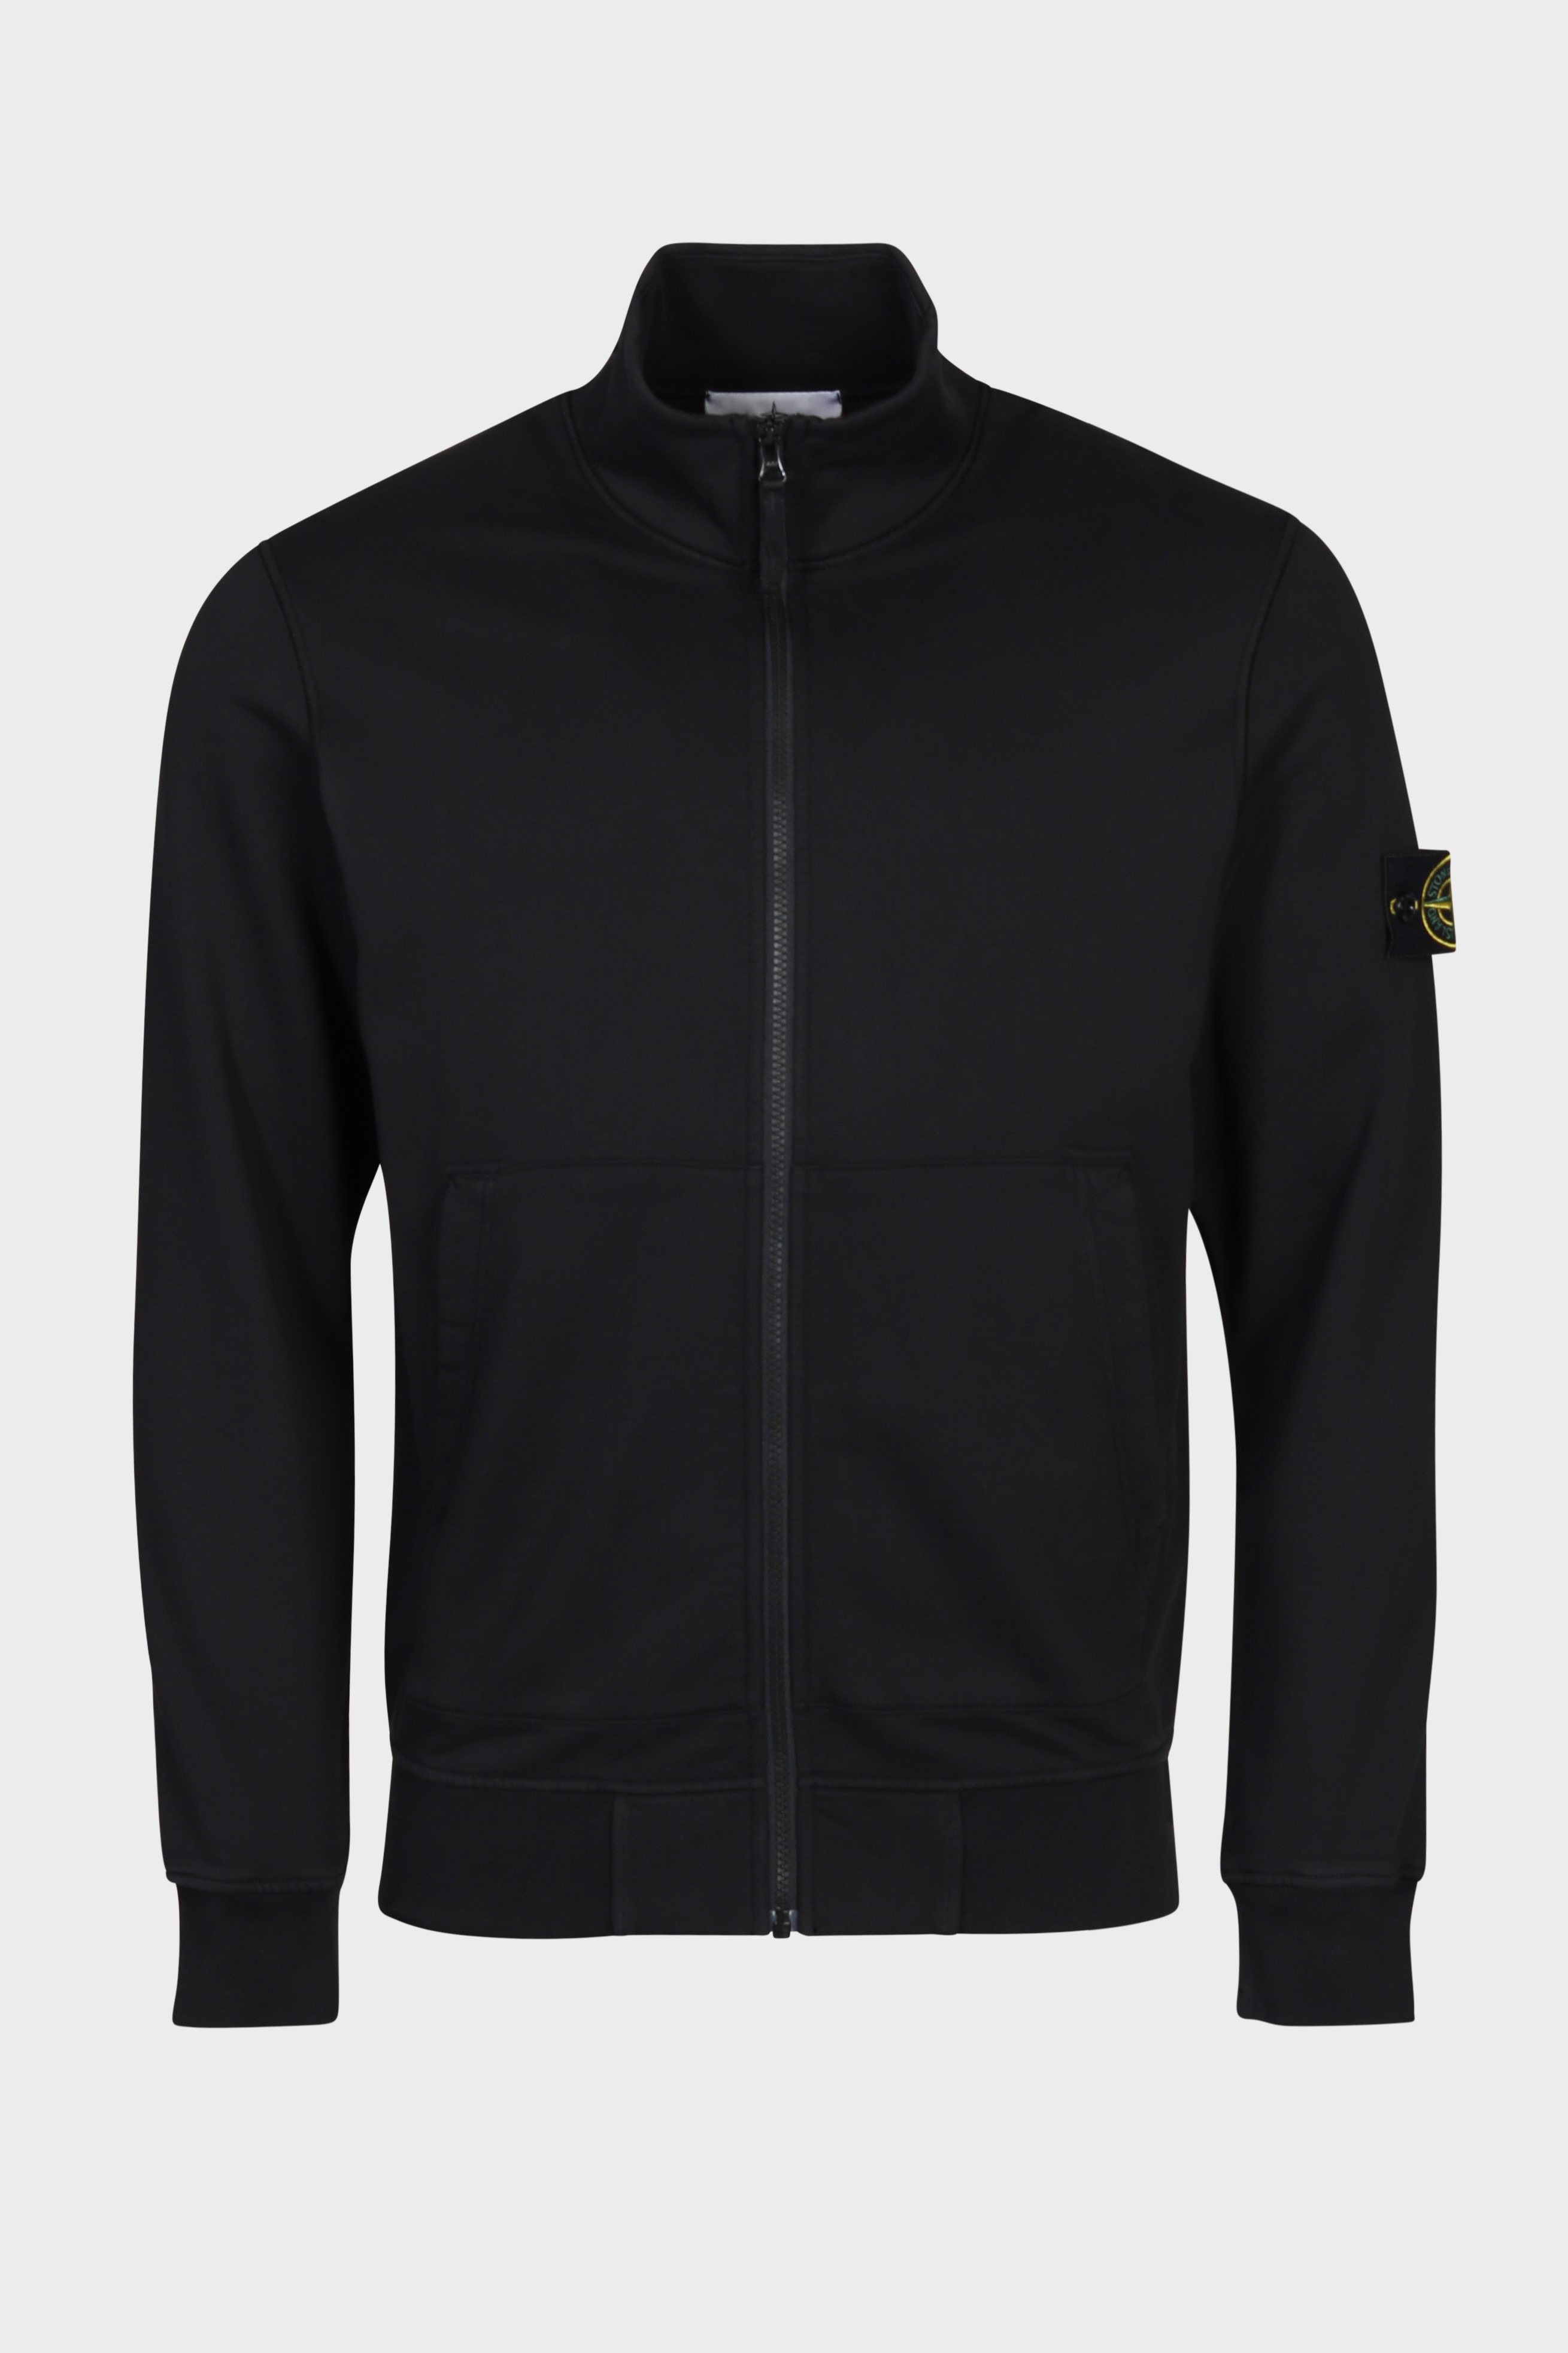 STONE ISLAND Zip Sweatshirt in Black 3XL